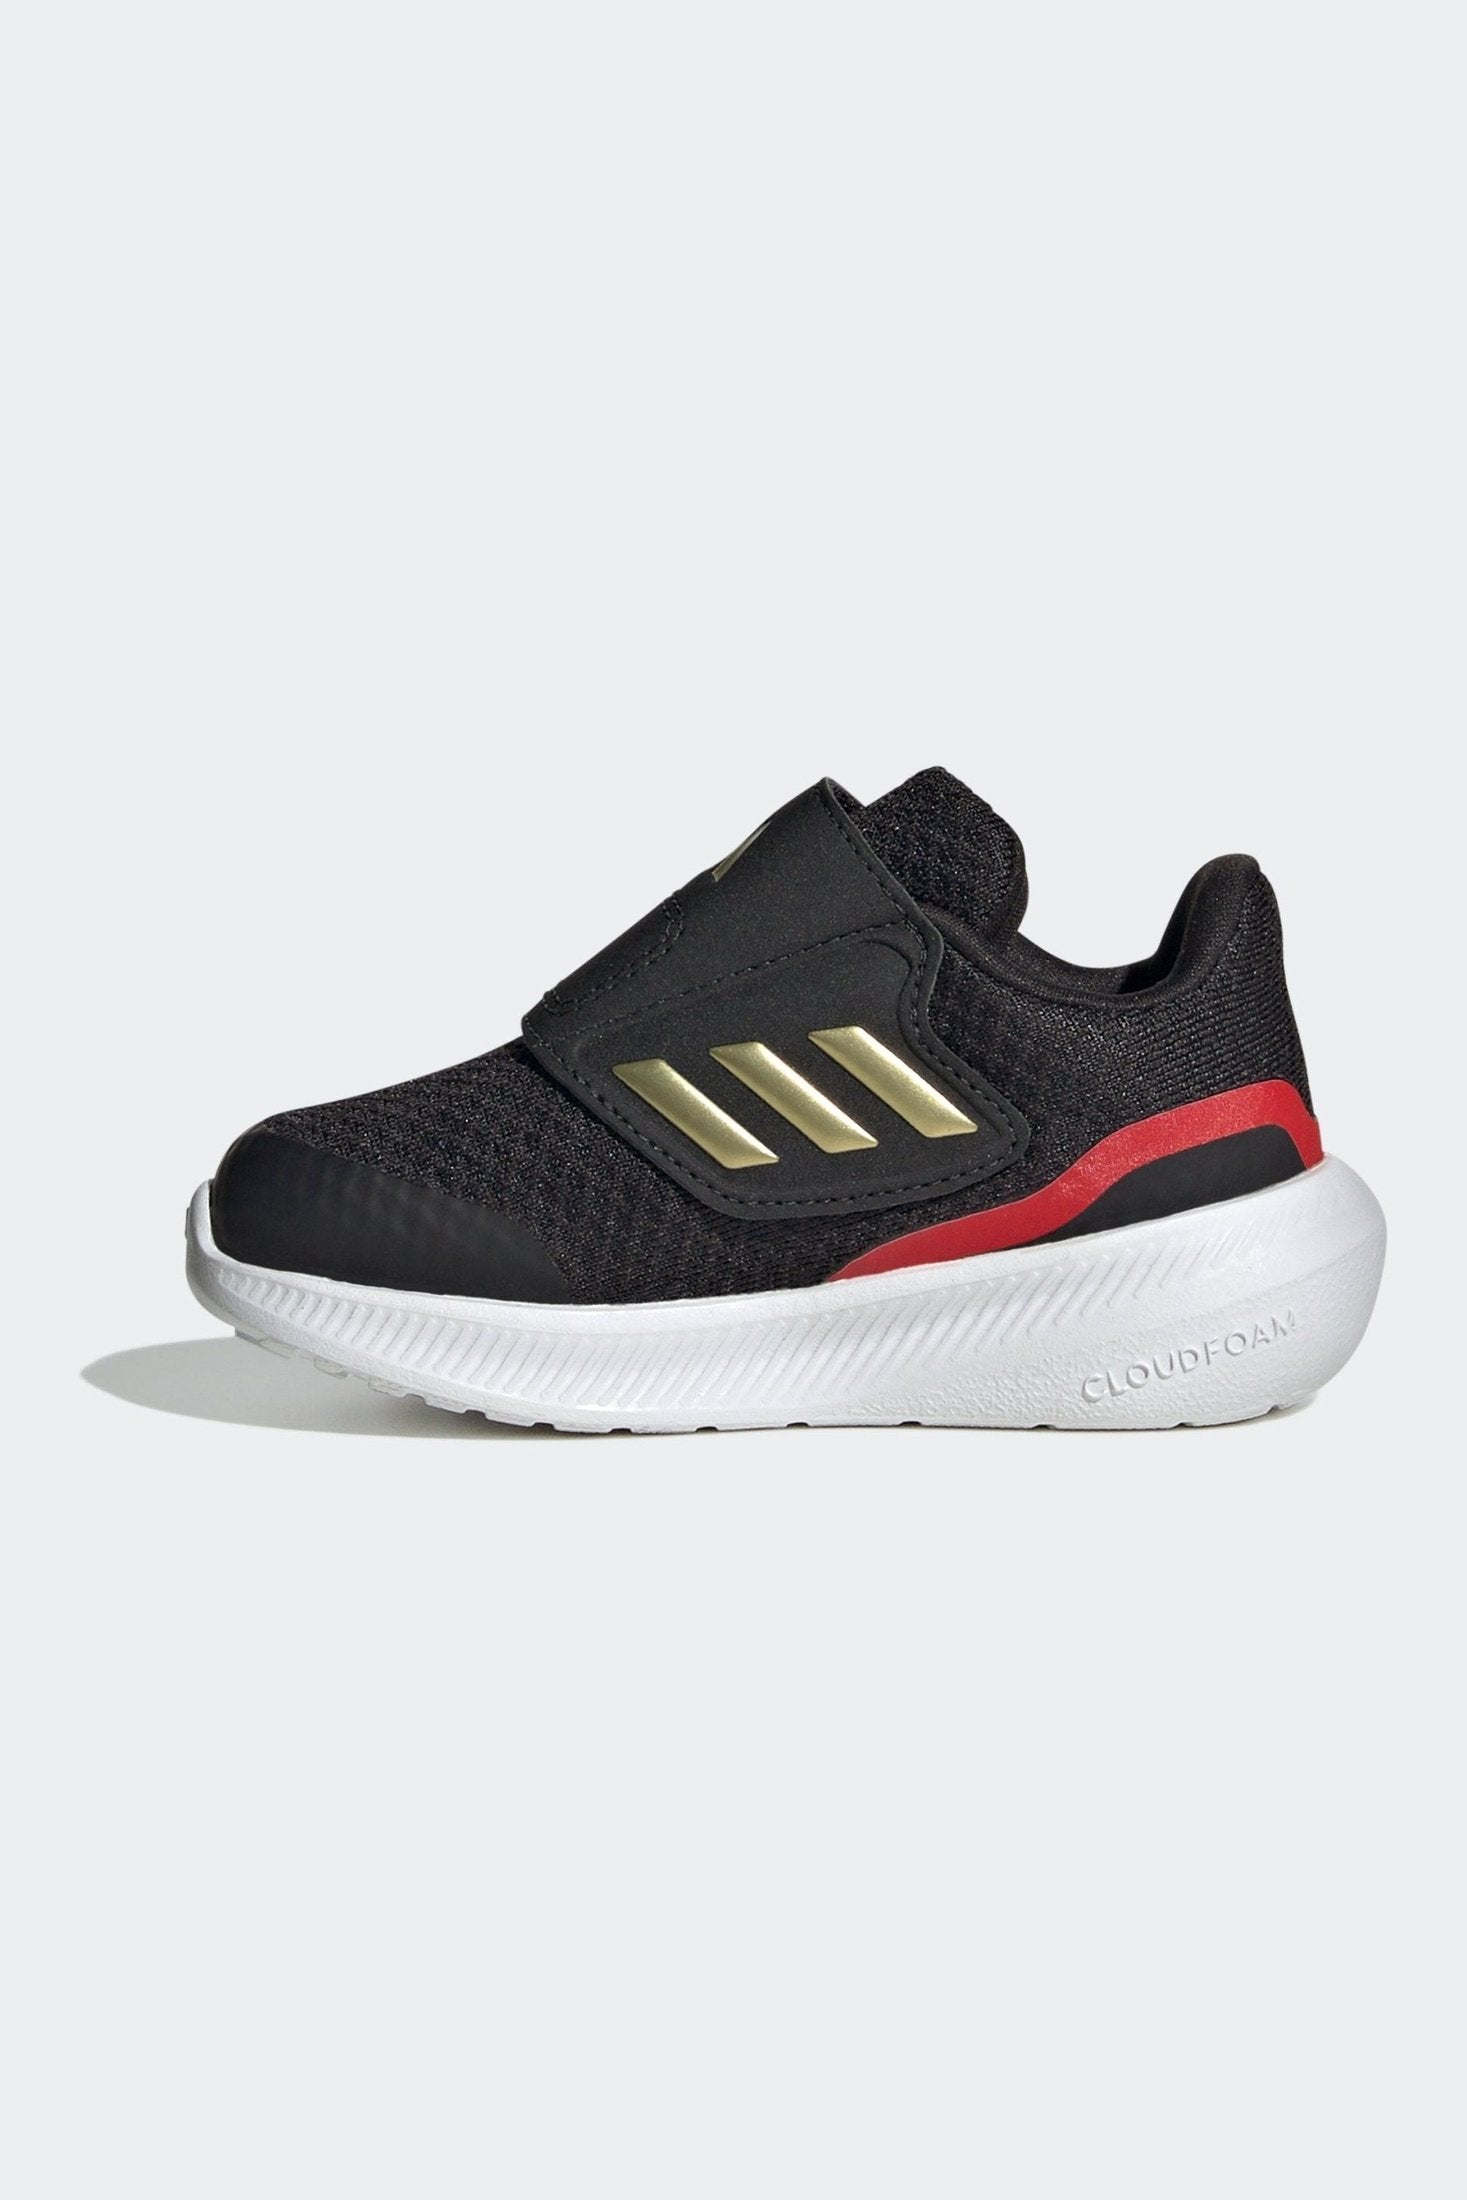 ADIDAS - נעליי ספורט לילדים RUNFALCON 3.0 בצבע שחור וזהב - MASHBIR//365